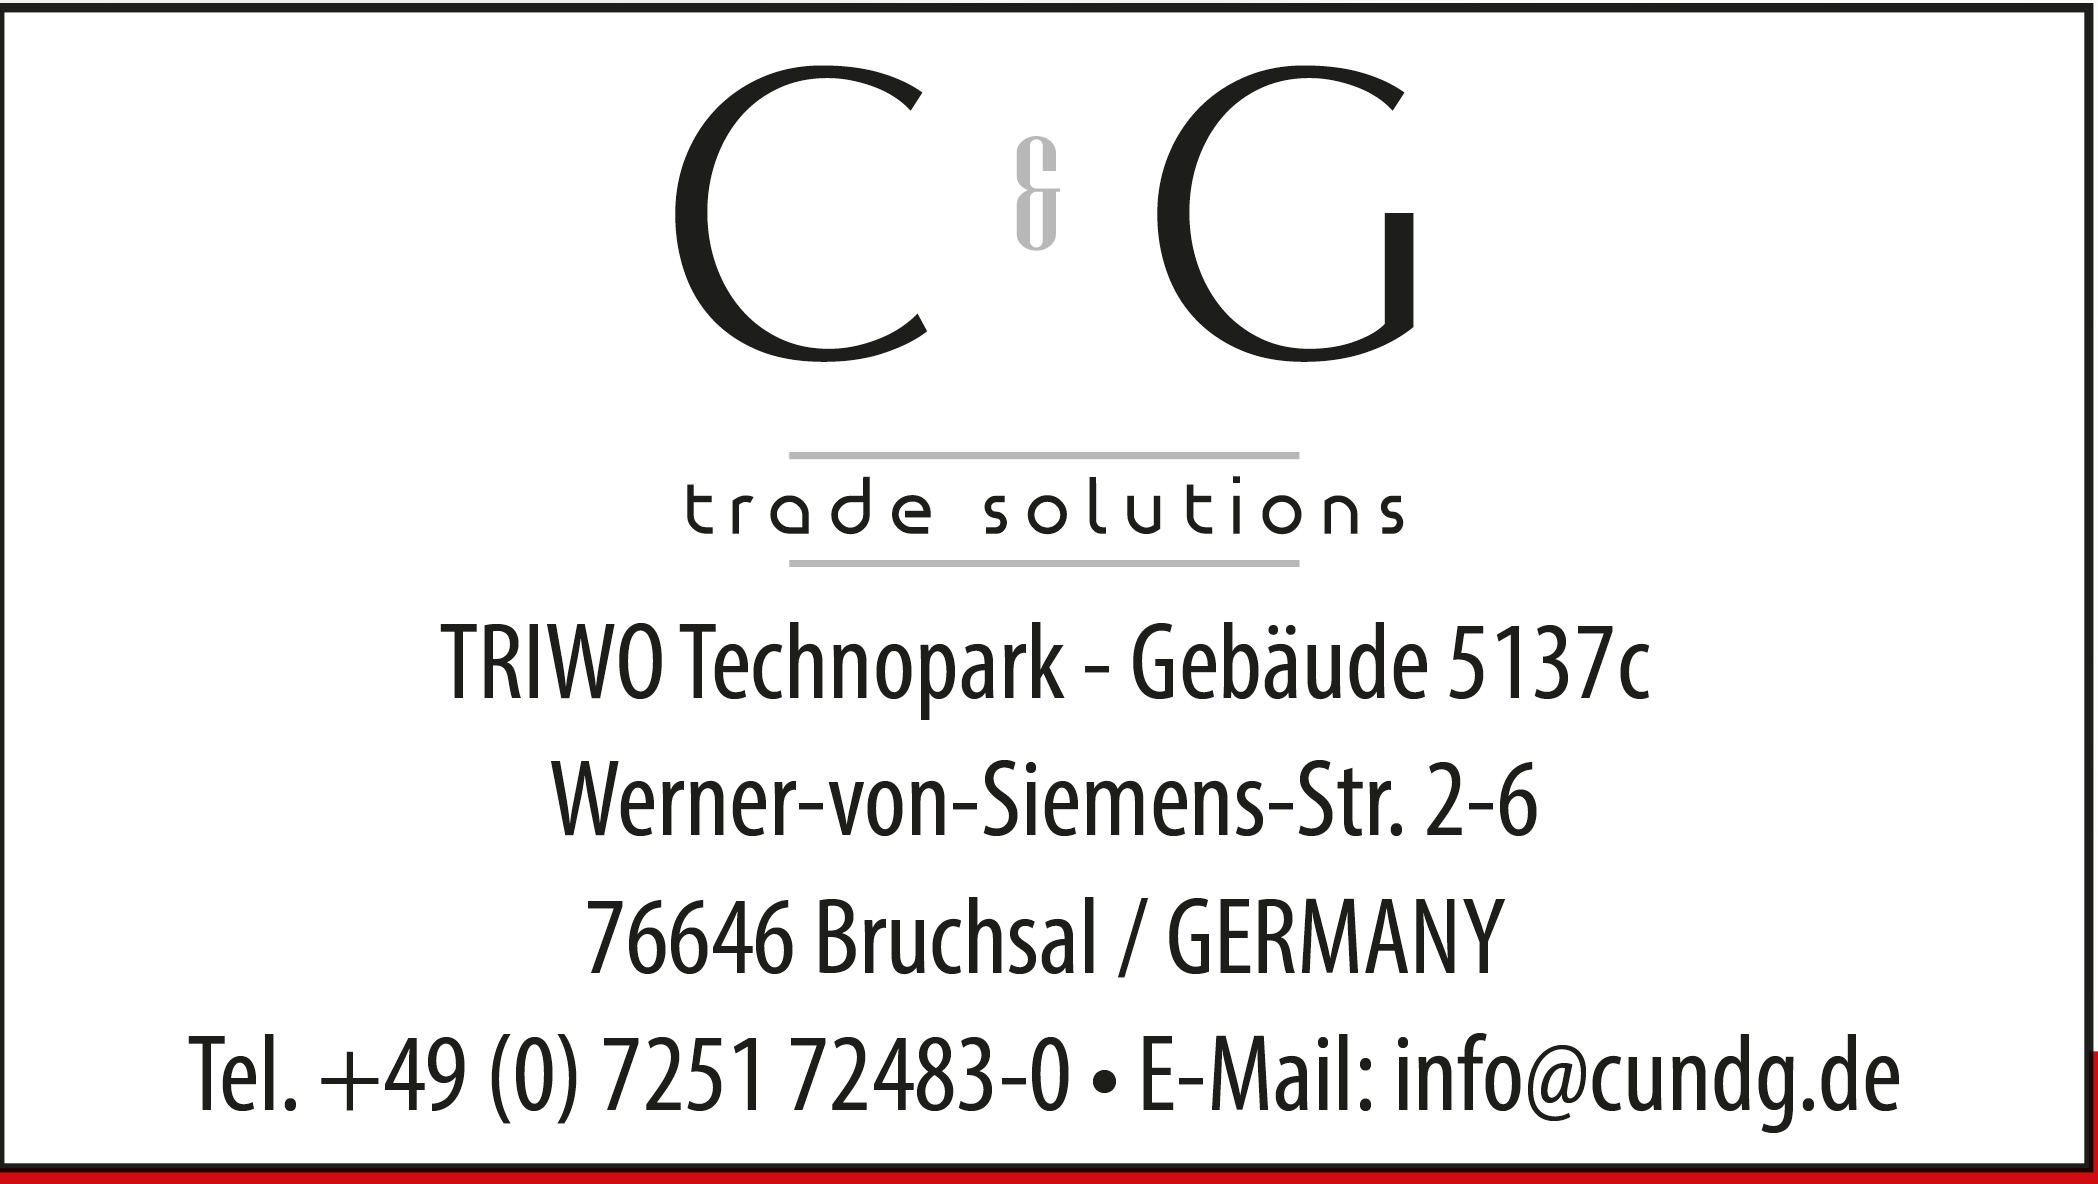 C & G GmbH trade solutions